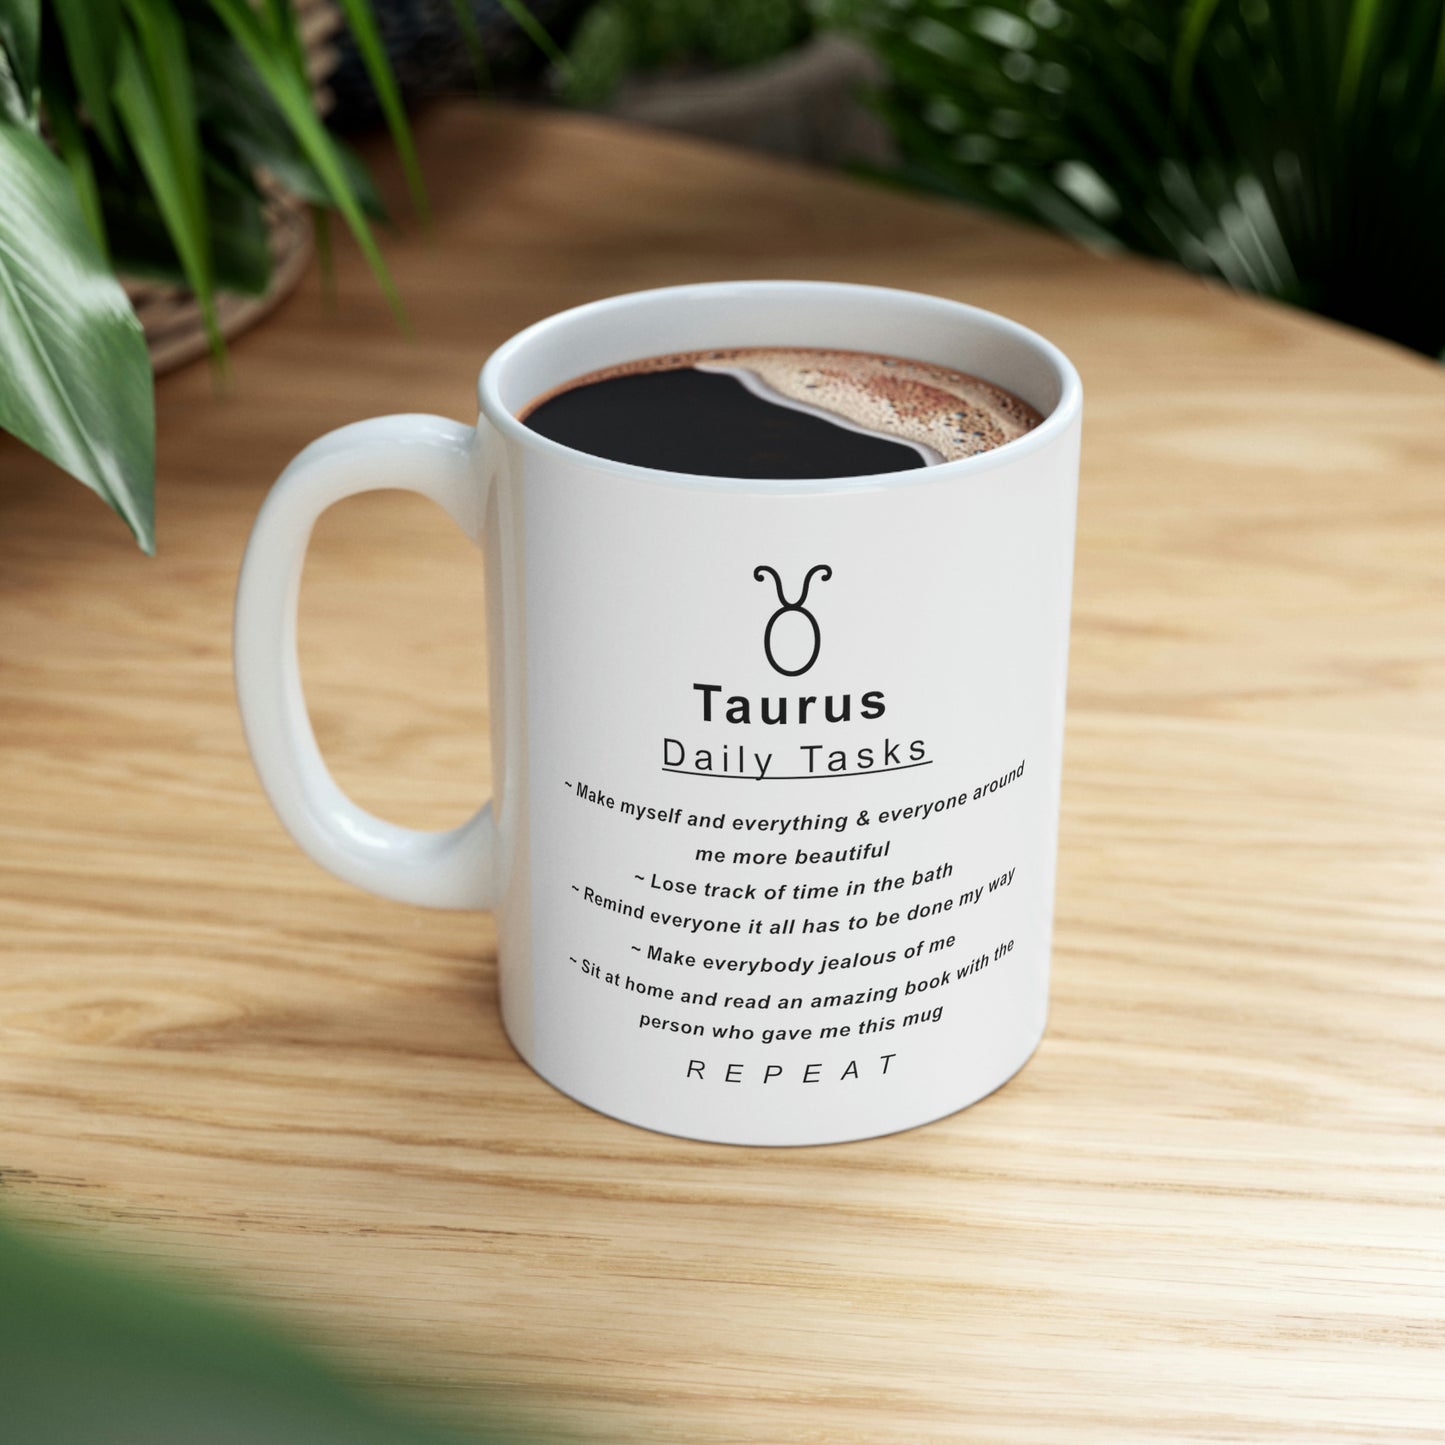 Taurus Mug: "Taurus Daily Tasks" - full text in description